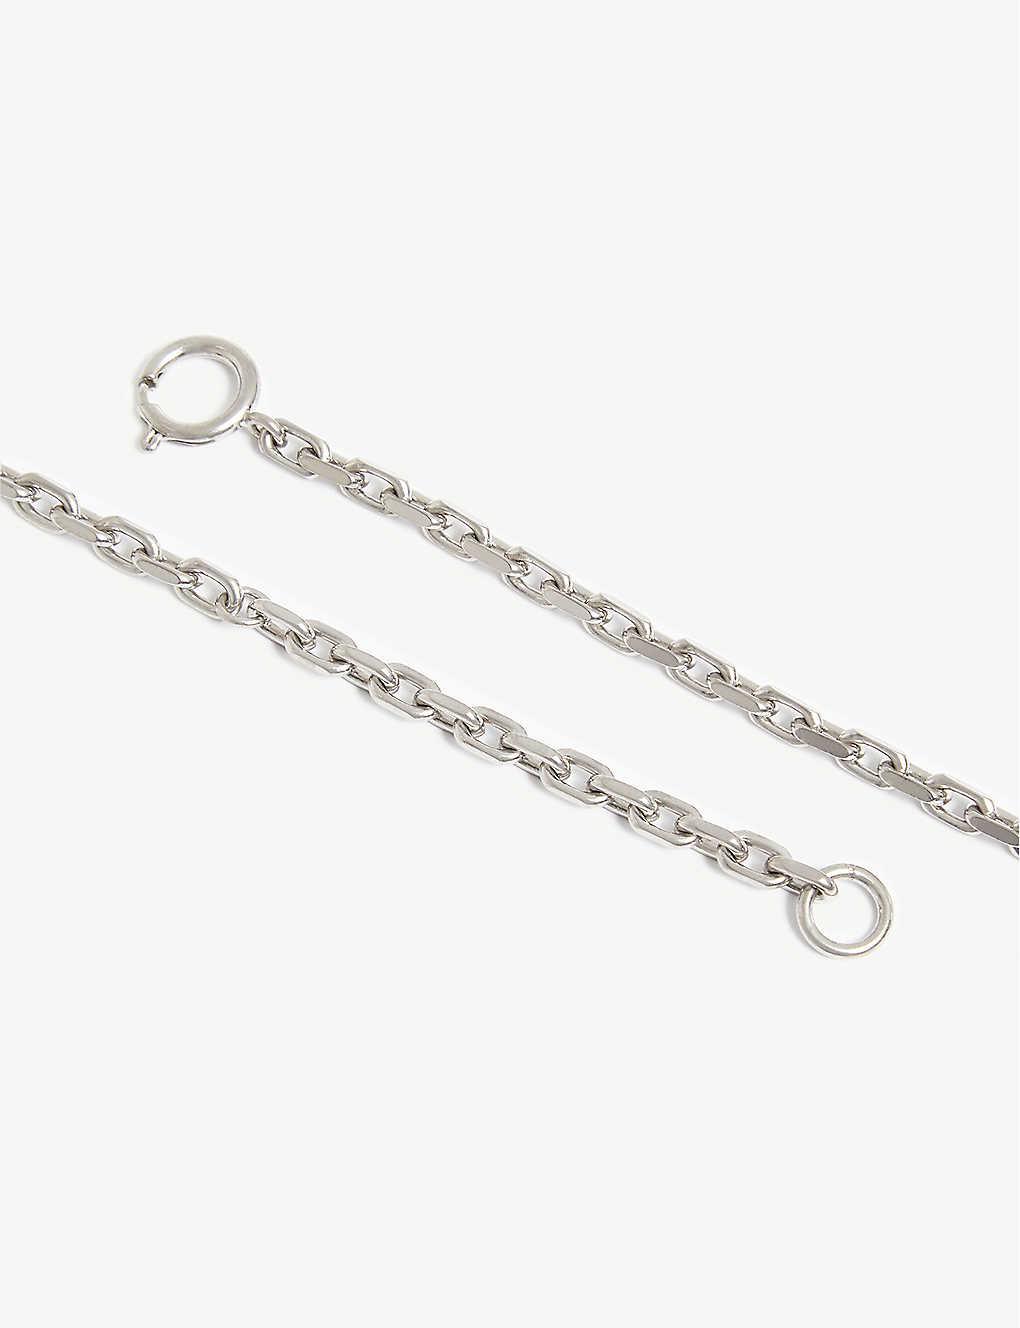 Off-White c/o Virgil Abloh Textured Hexnut Necklace in Metallic for Men